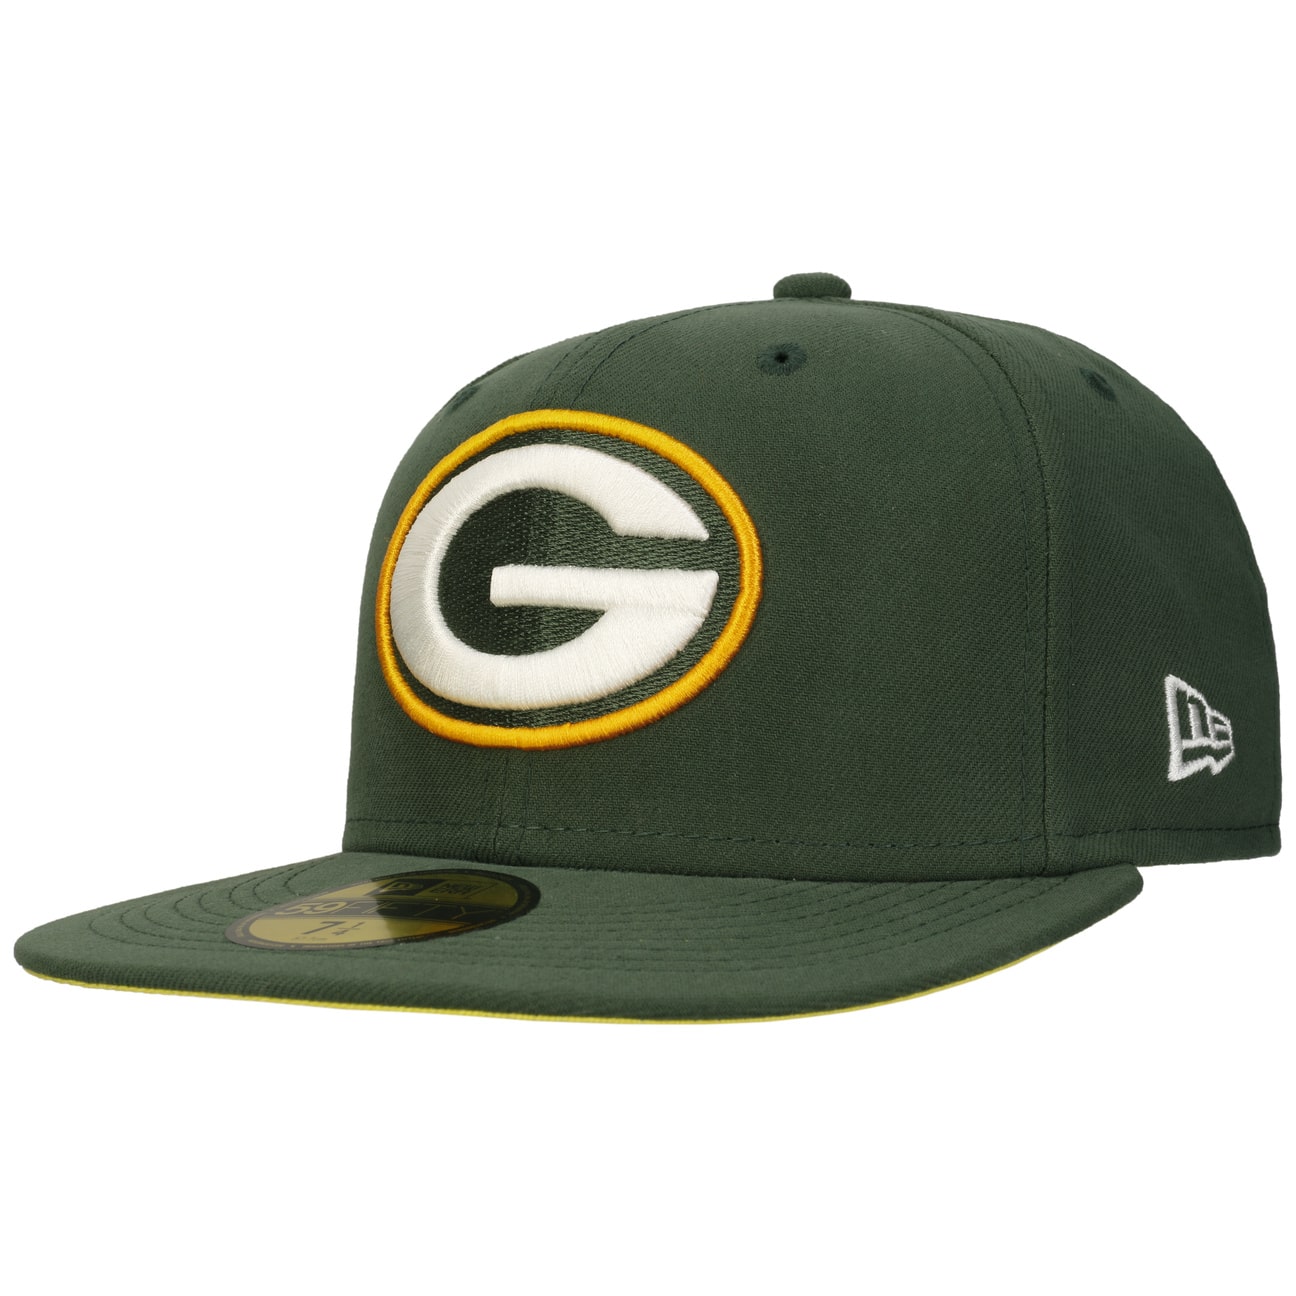 59Fifty NFL Green Bay Packers Cap by New Era von new era